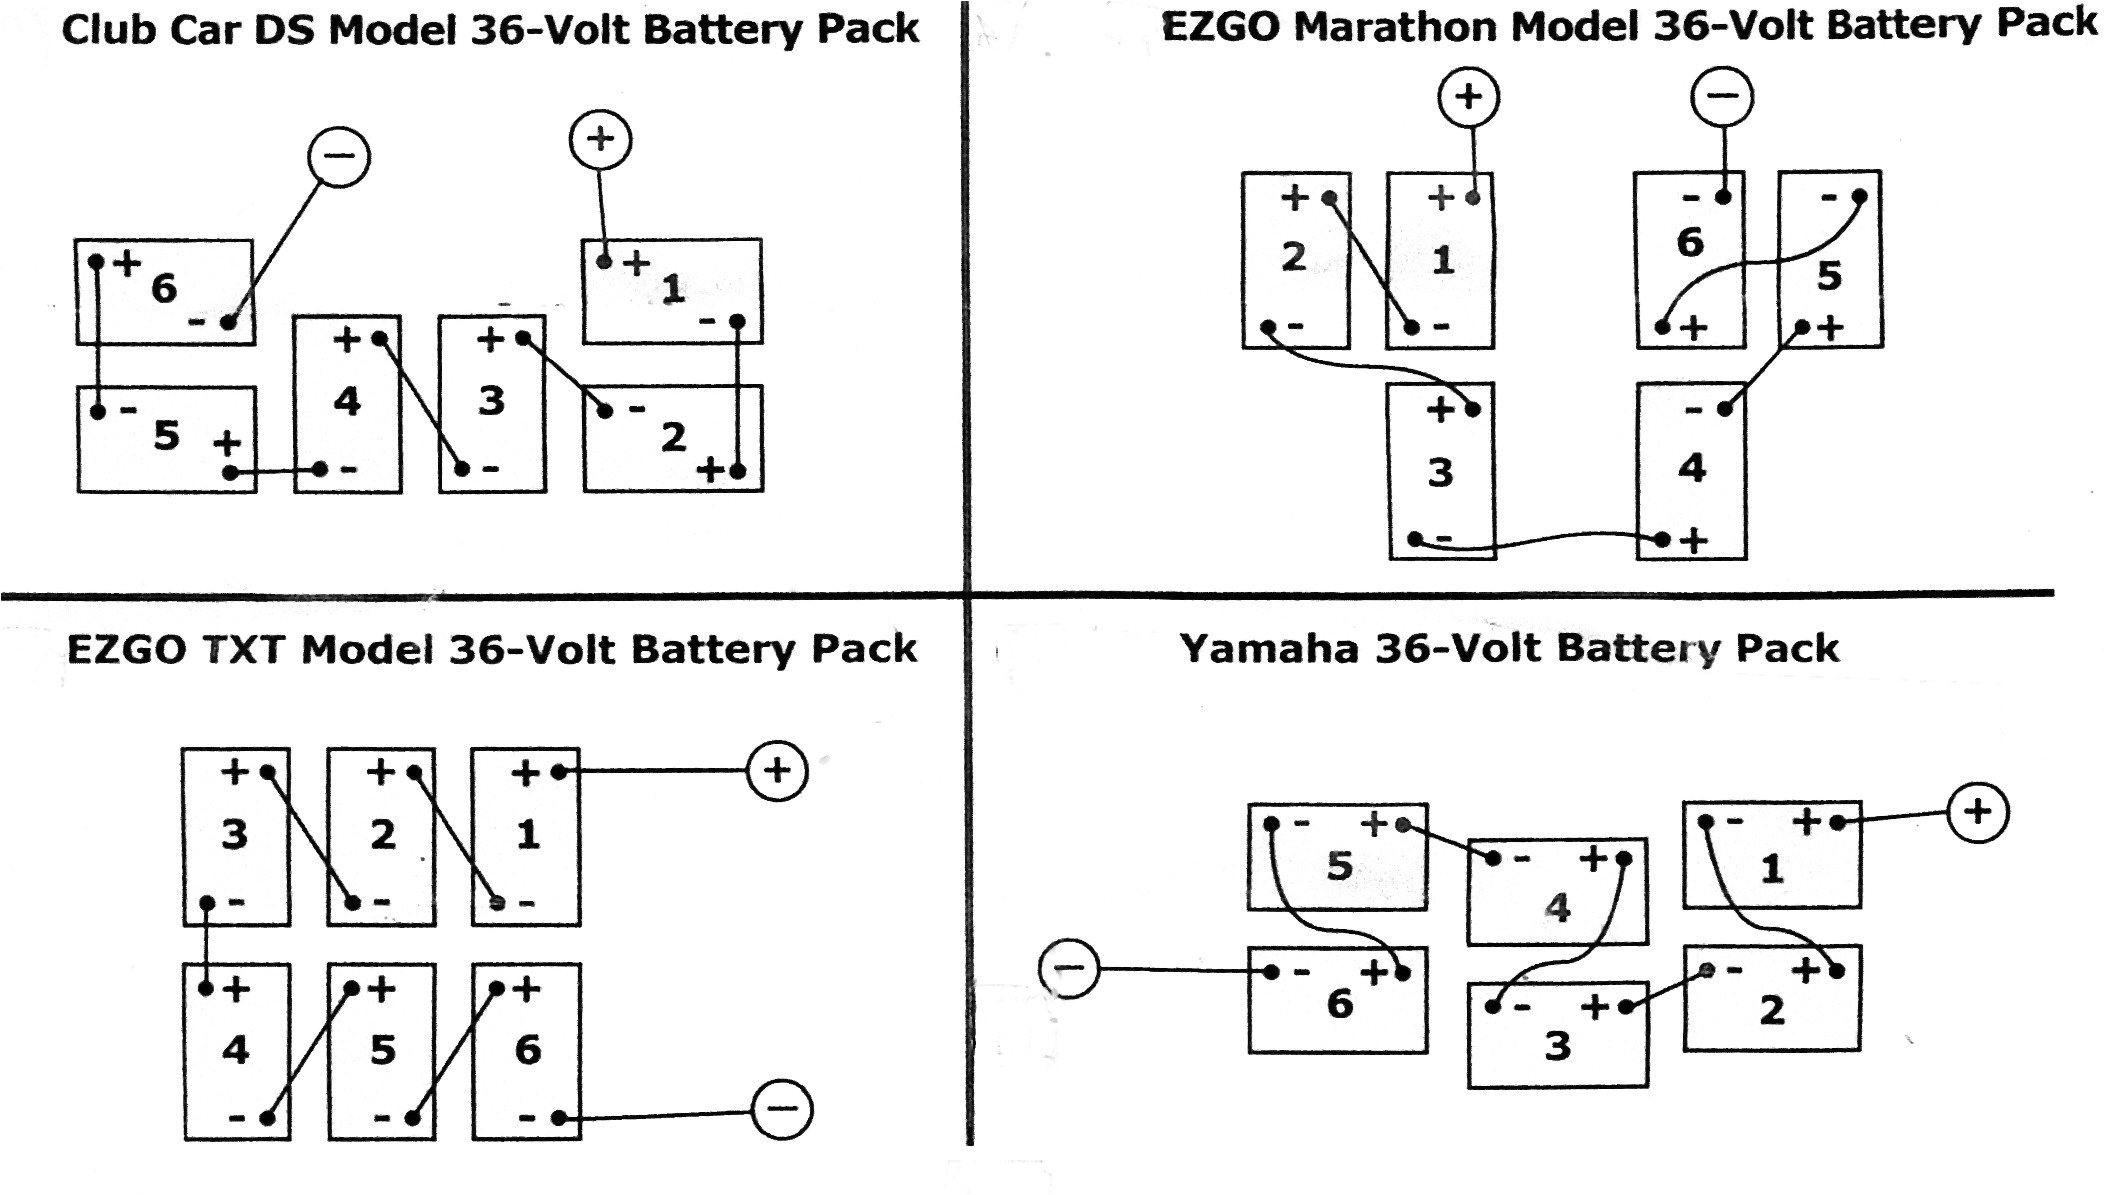 trojan batteries wiring diagram wiring diagram completed trojan batteries wiring diagram free download source golf cart